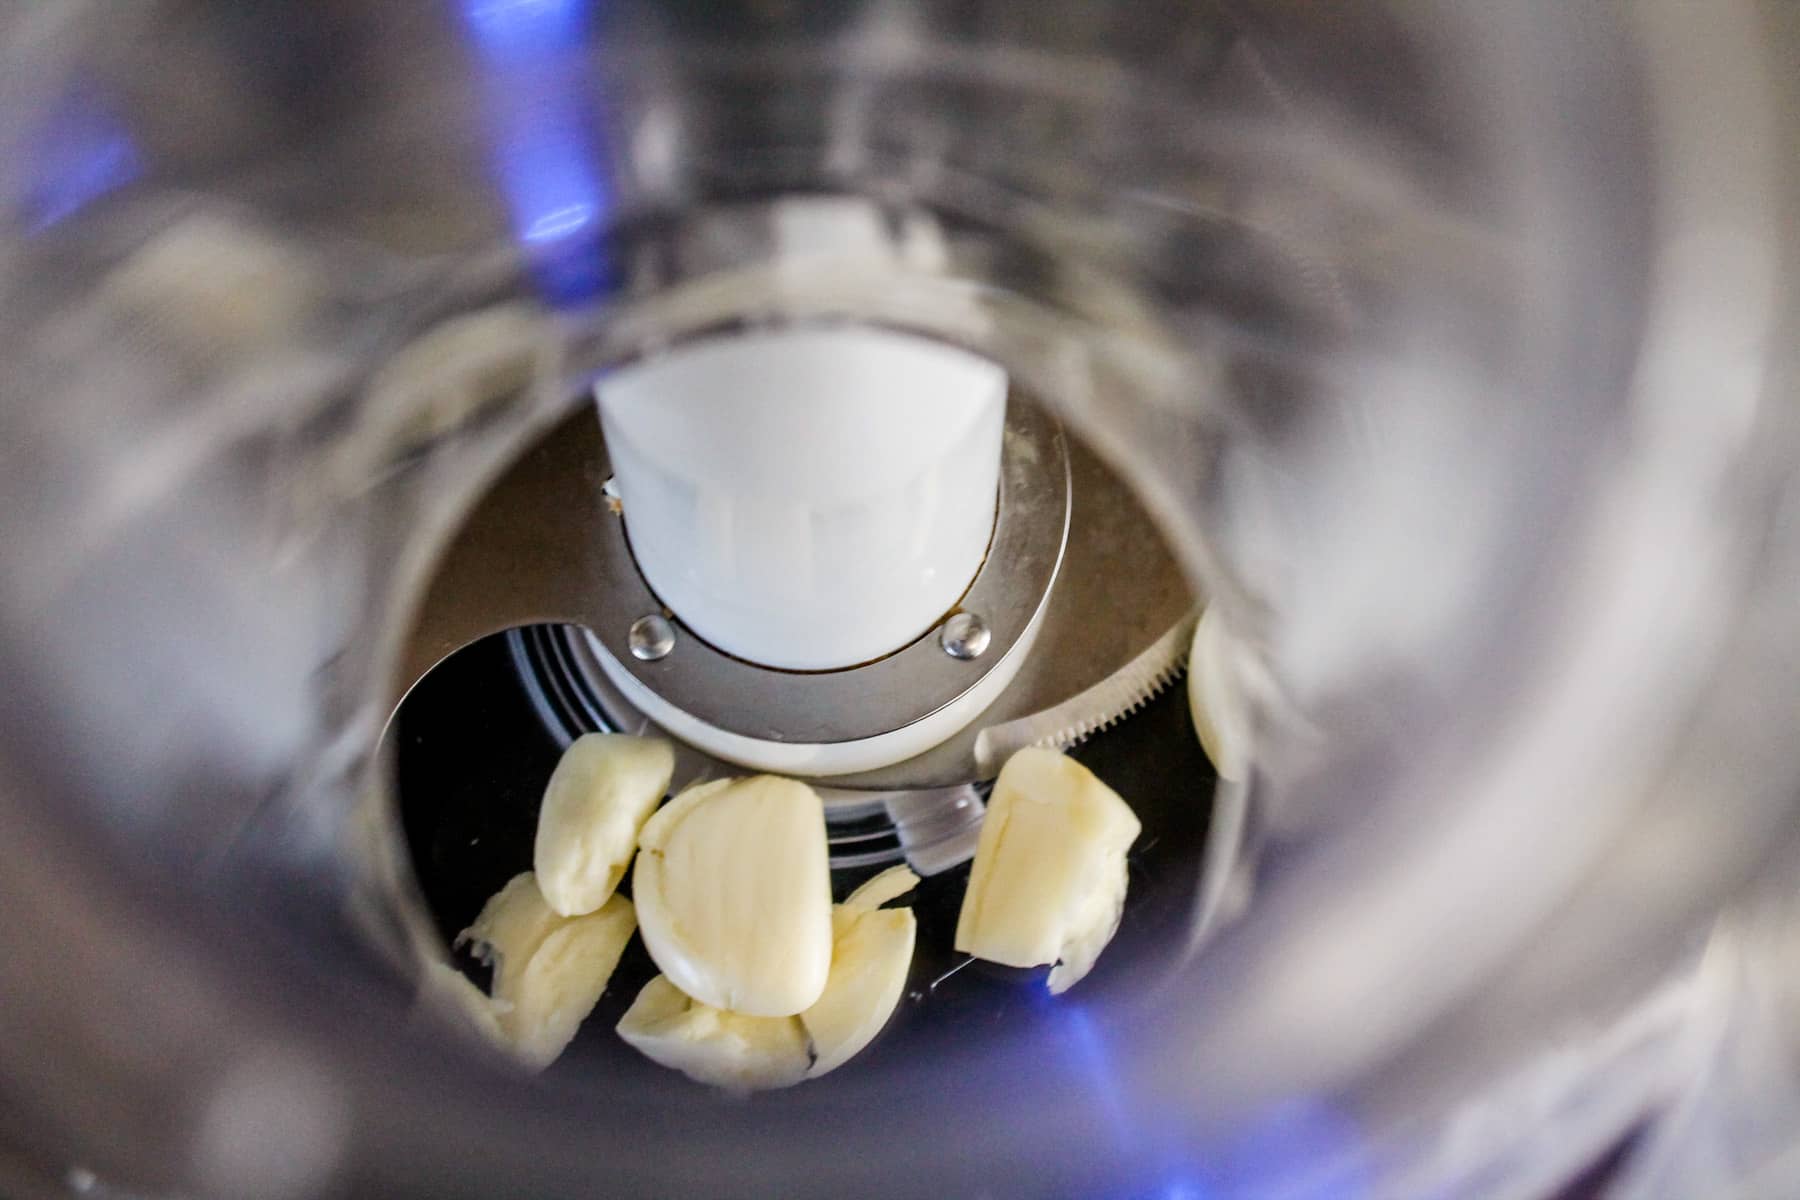 cloves of garlic in a food processor.